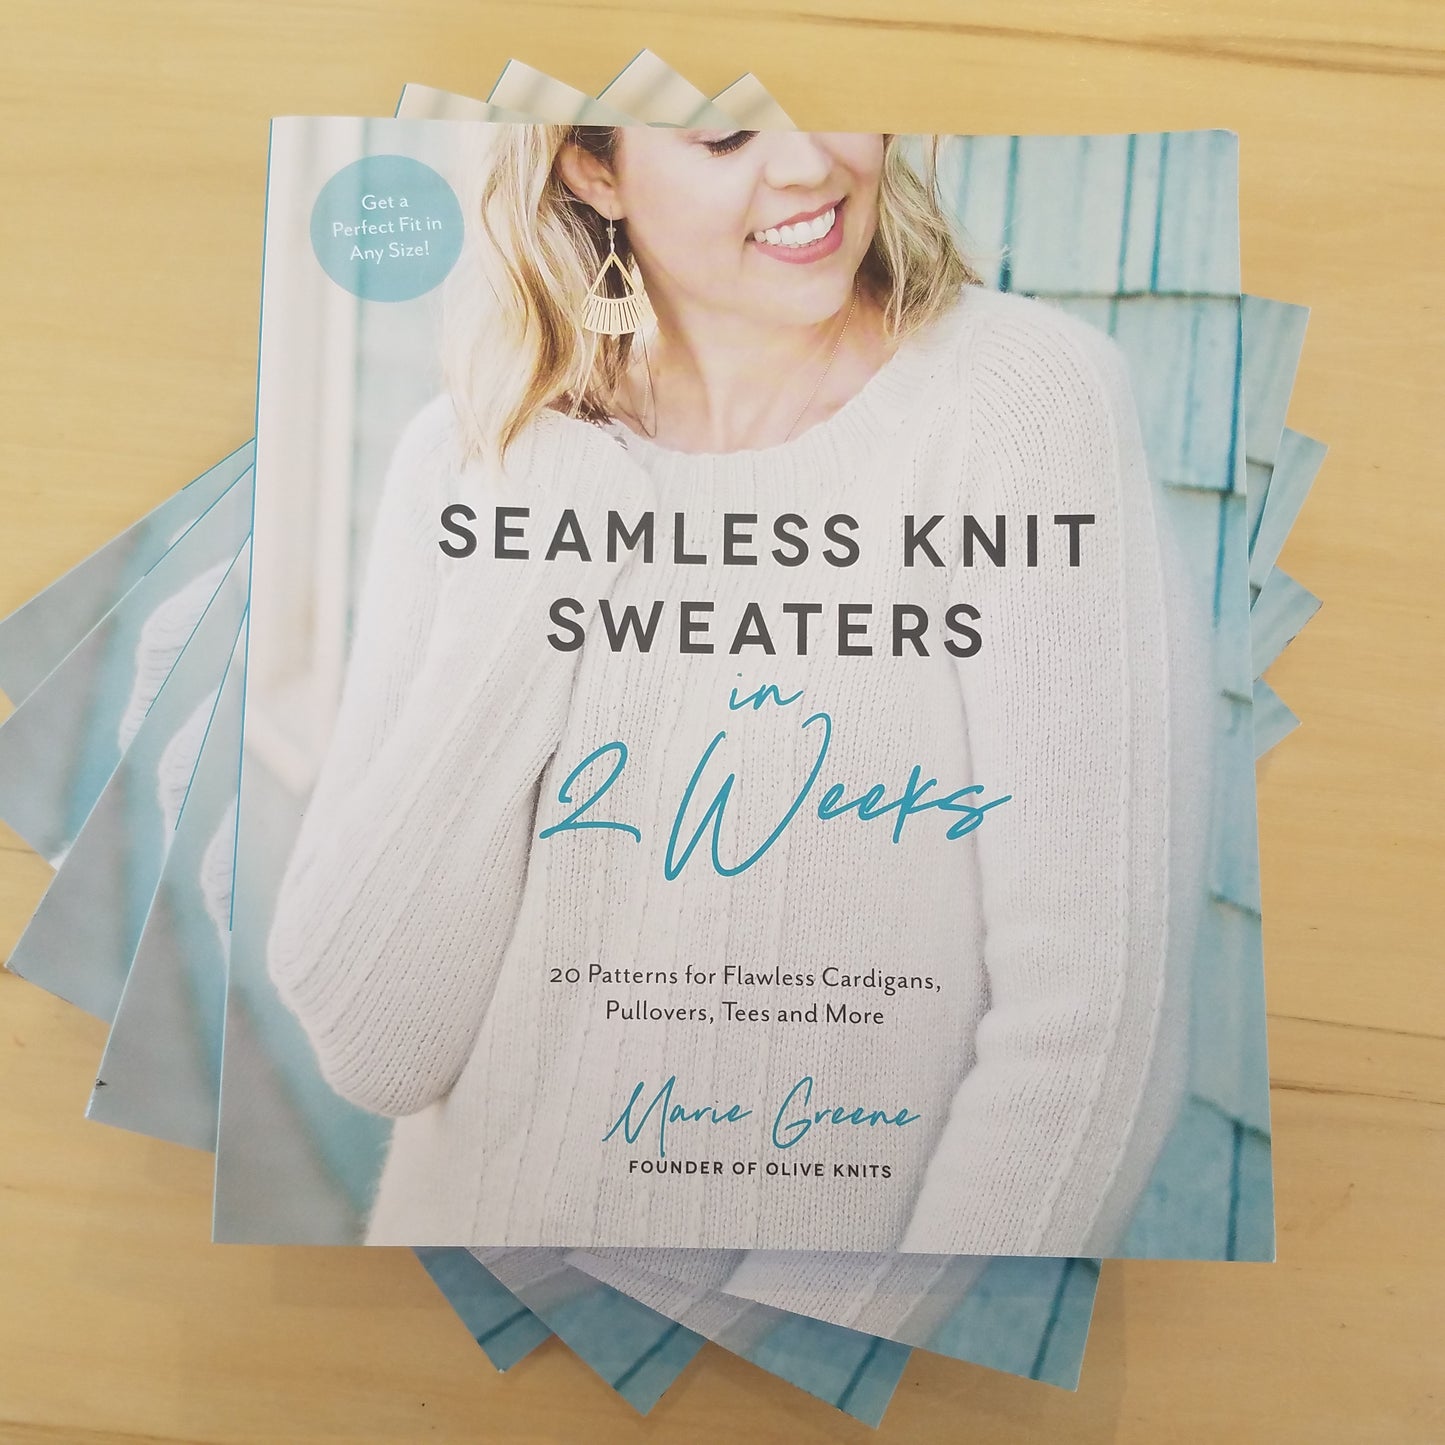 Seamless Knit Sweaters in 2 Weeks by Marie Greene - Maine Yarn & Fiber Supply